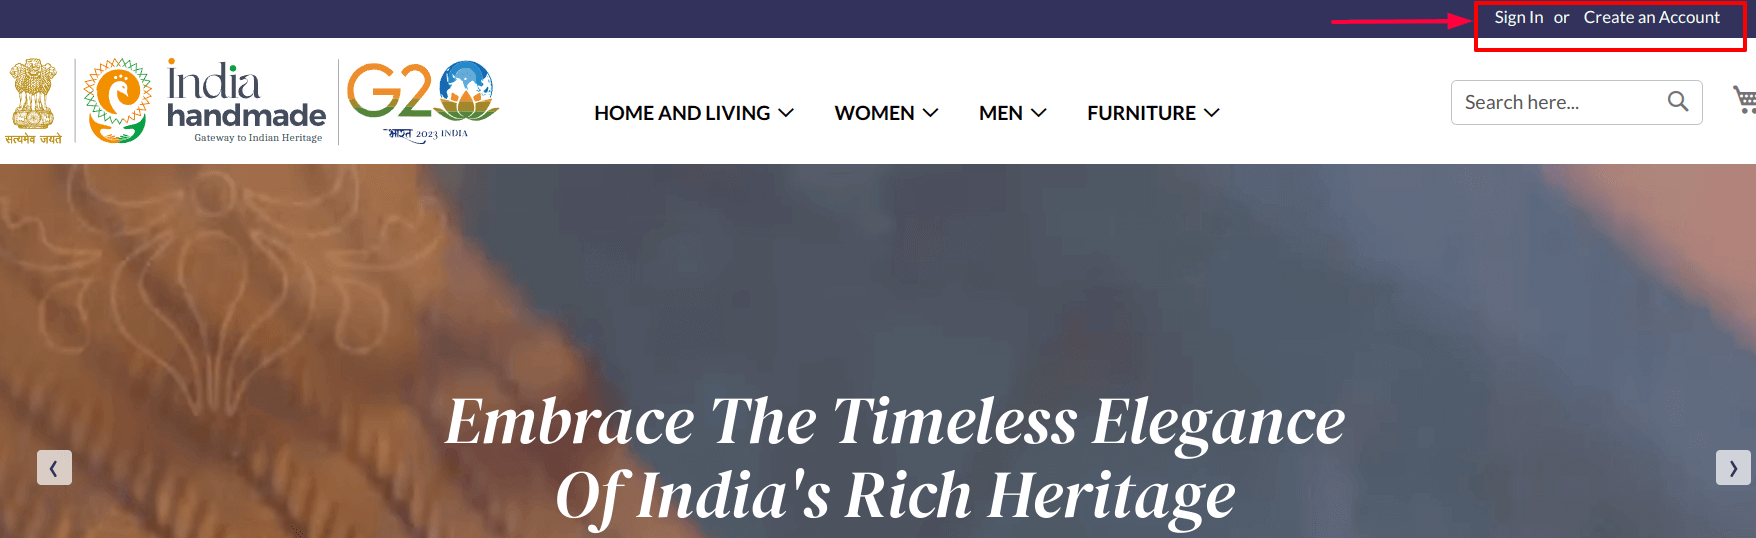 India Handmade Portal